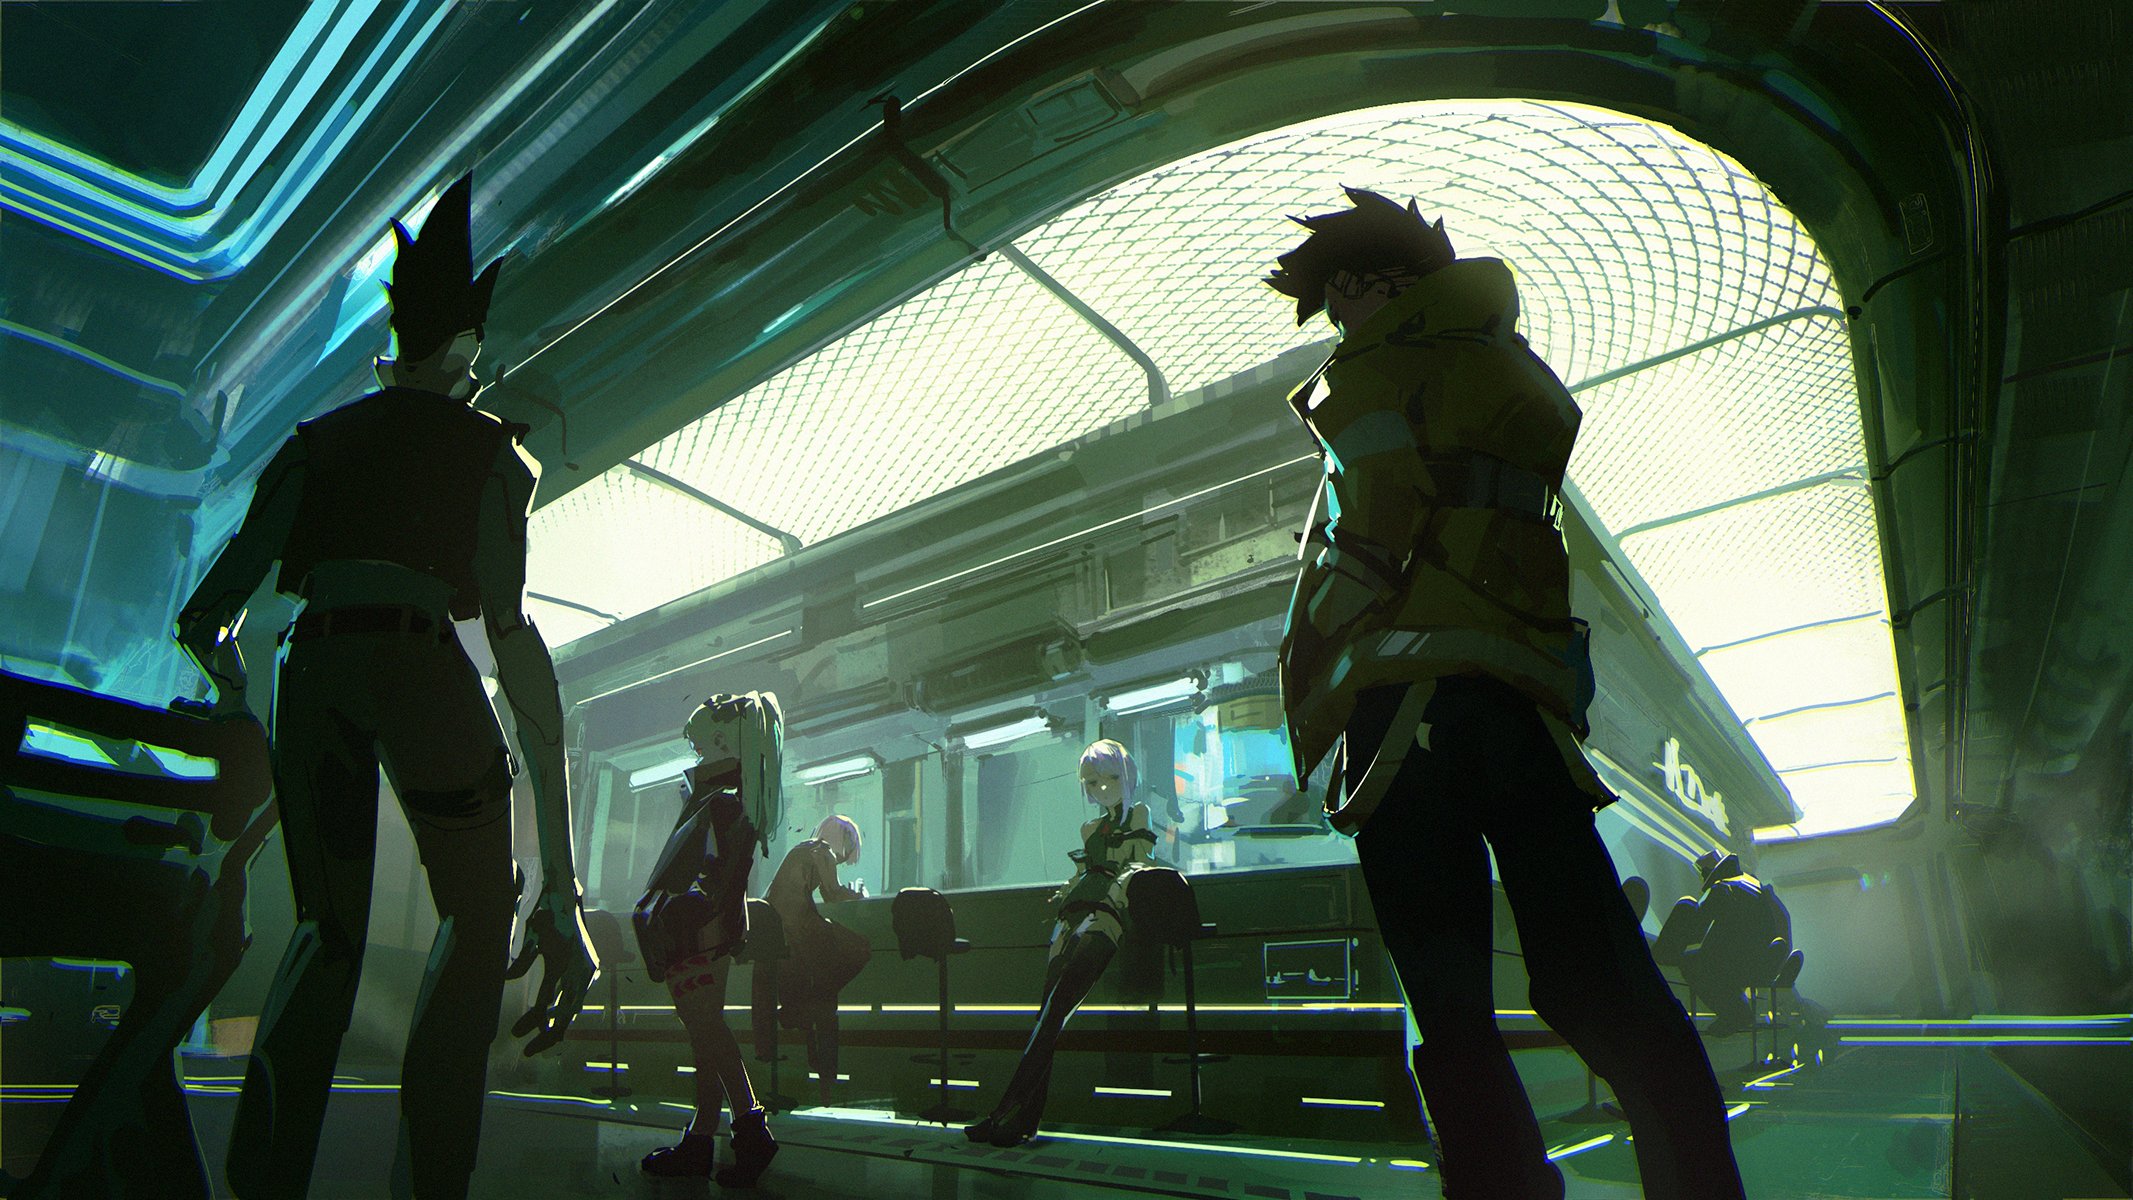 Futuristic cyberpunk Anime wallpaper with vibrant HD colors depicting Cyberpunk: Edgerunners scene.